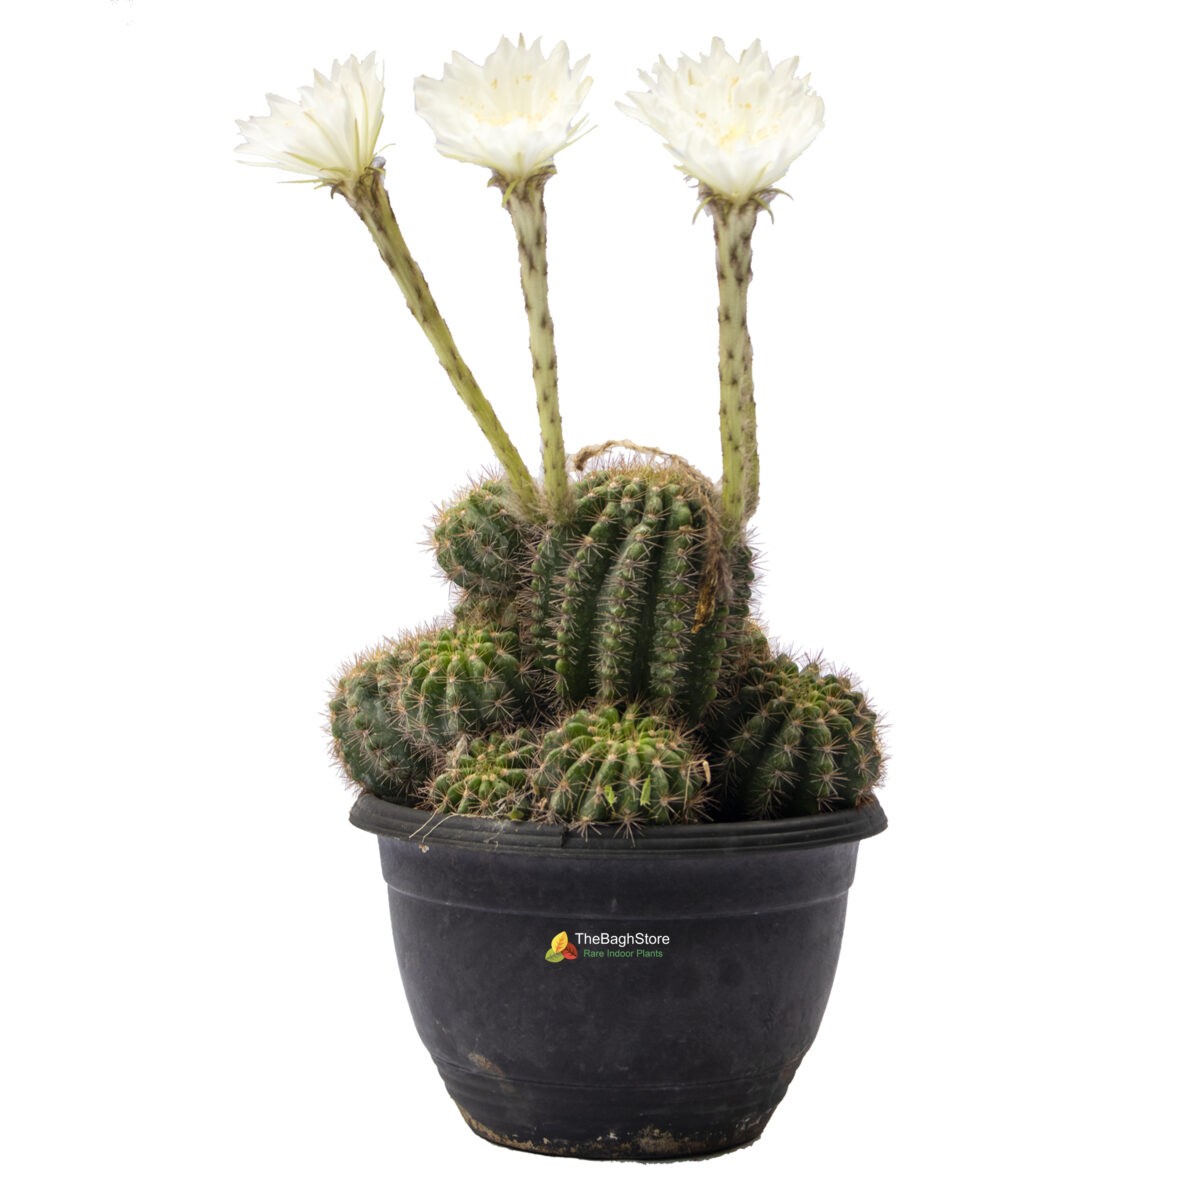 TheBaghStore Cactus